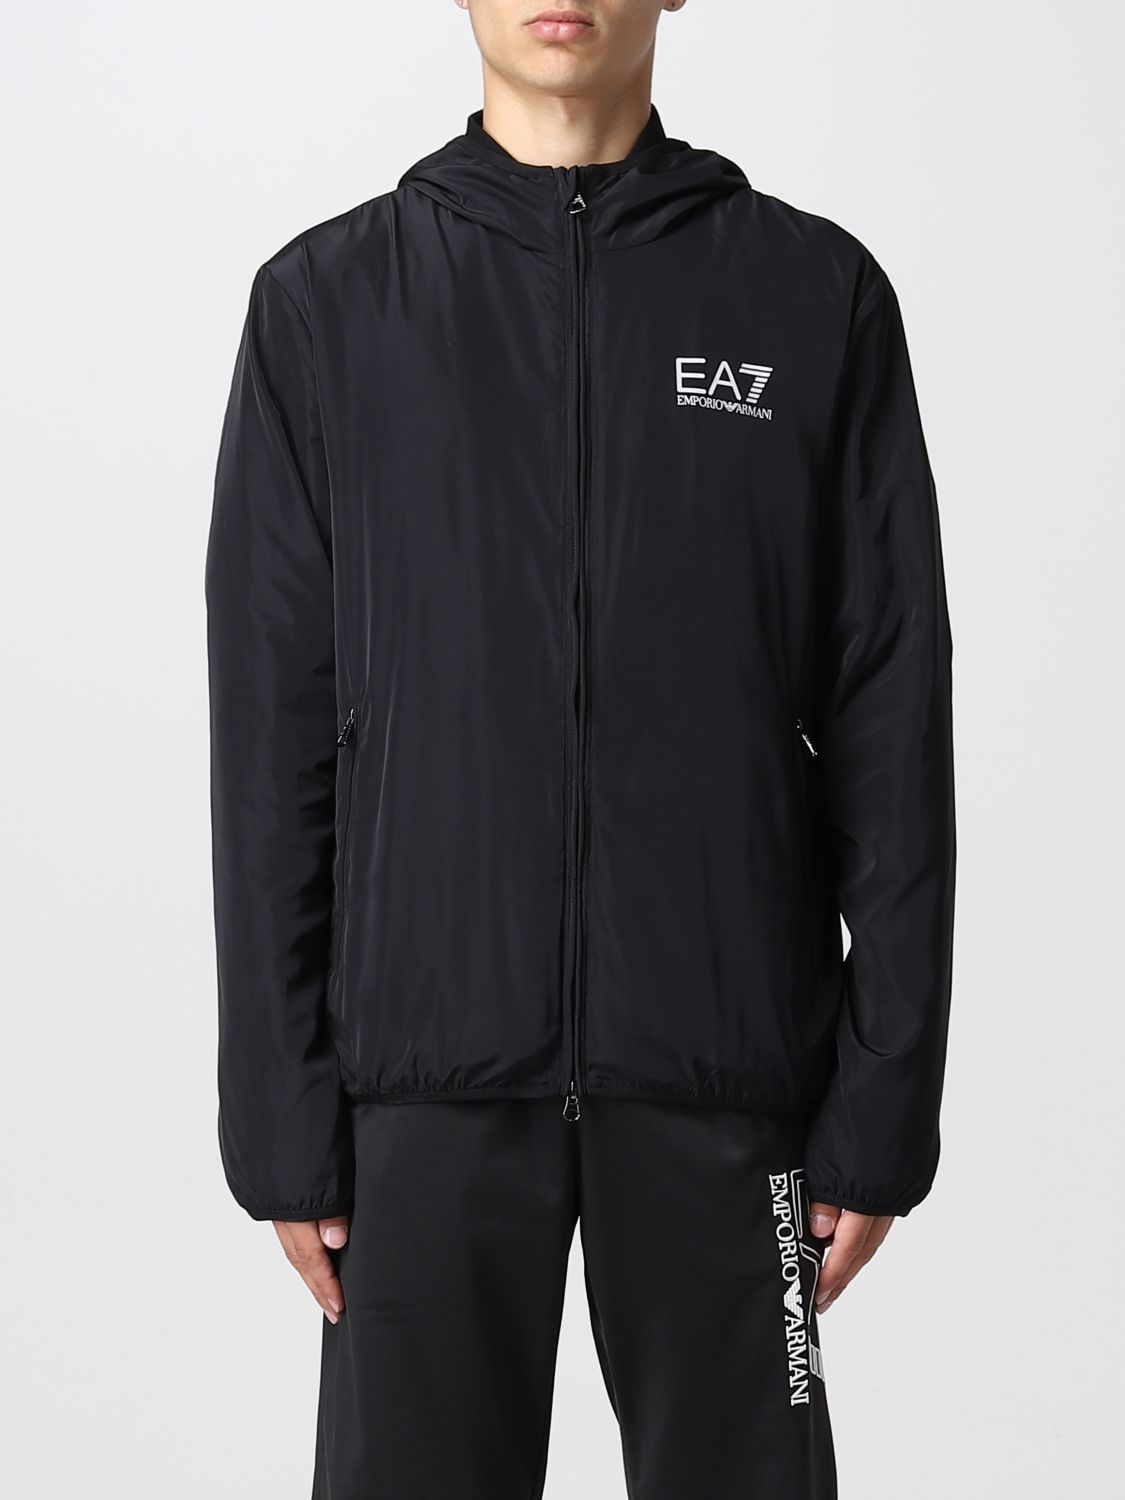 Ea7 Jacket Men In Black | ModeSens